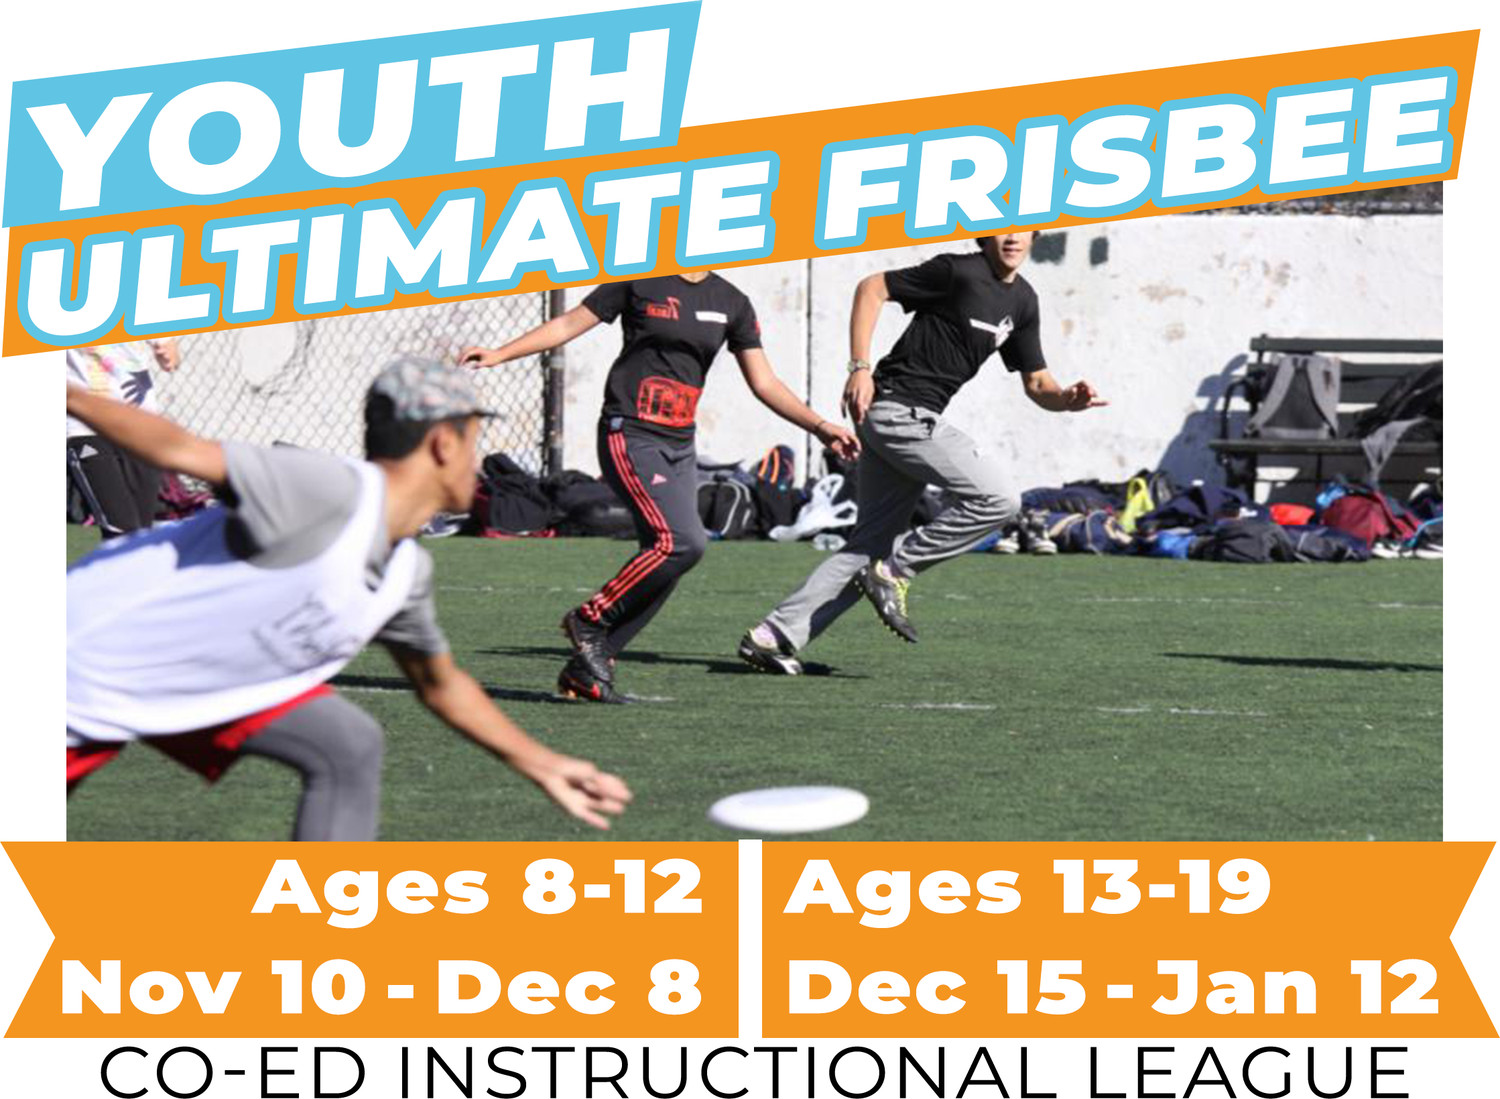 Instructional Youth Ultimate Frisbee League Providence Media